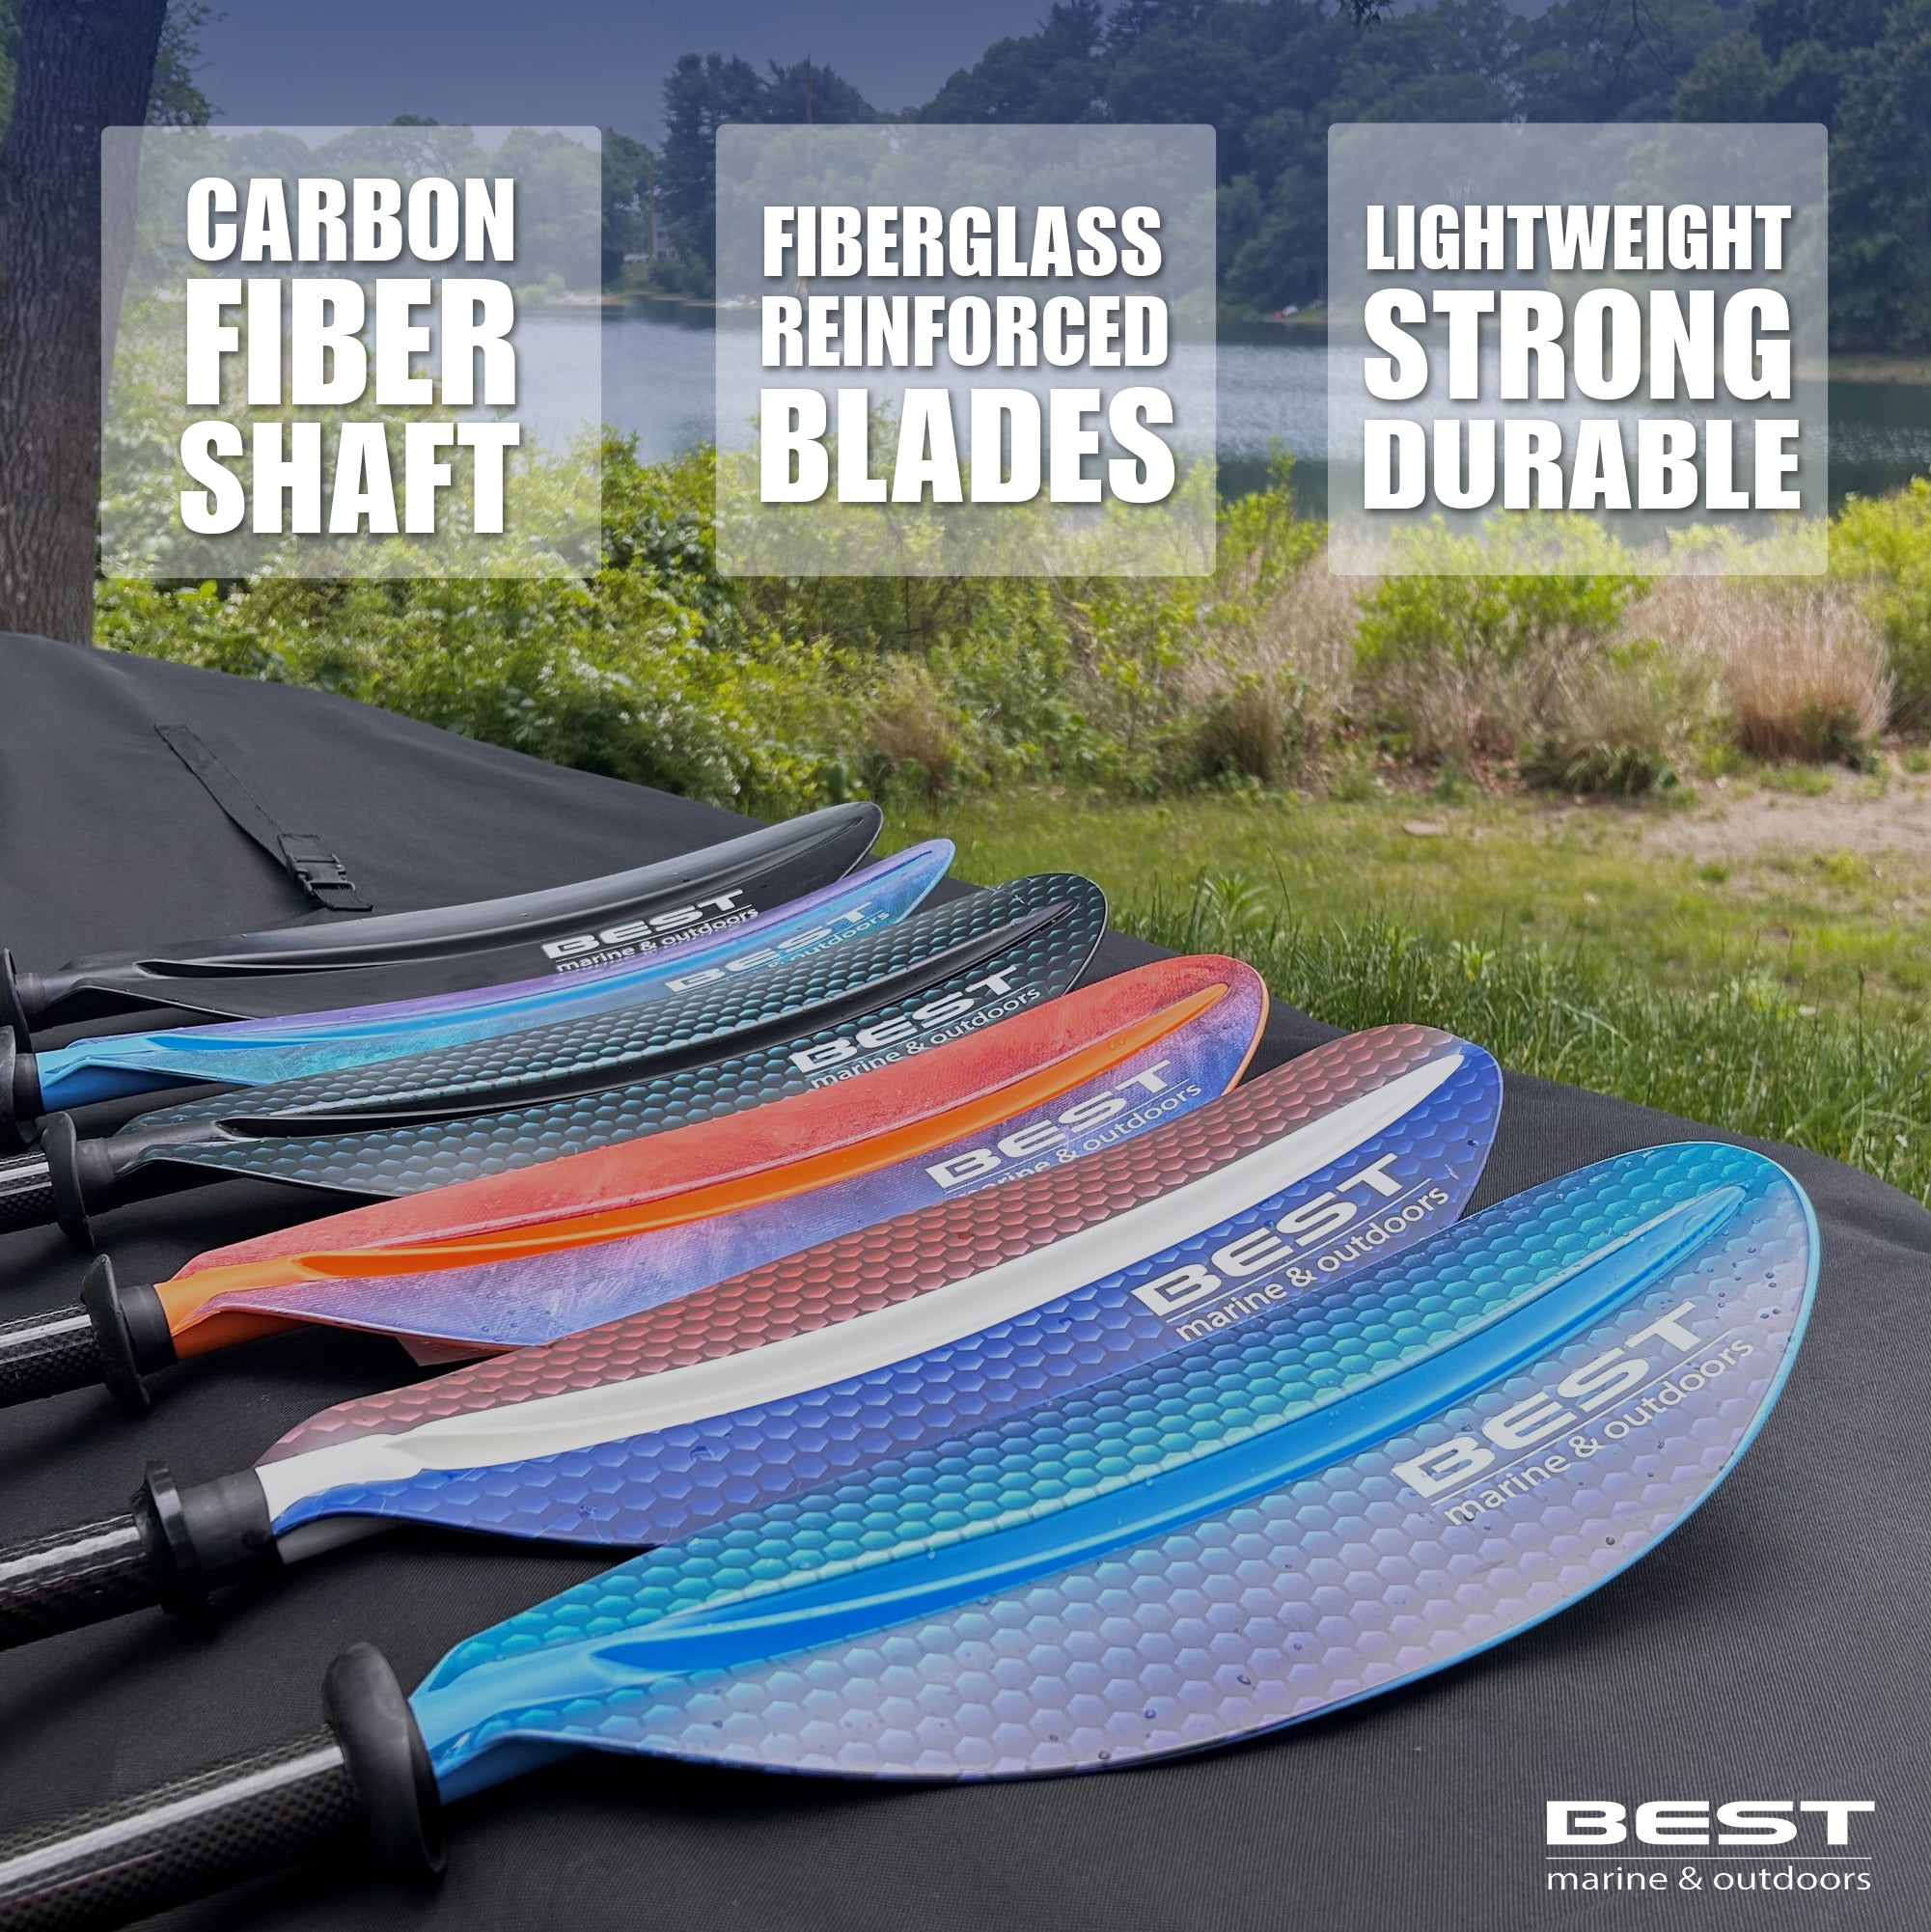 Lightweight Carbon Fiber Kayak Paddle with Oval Shaft for